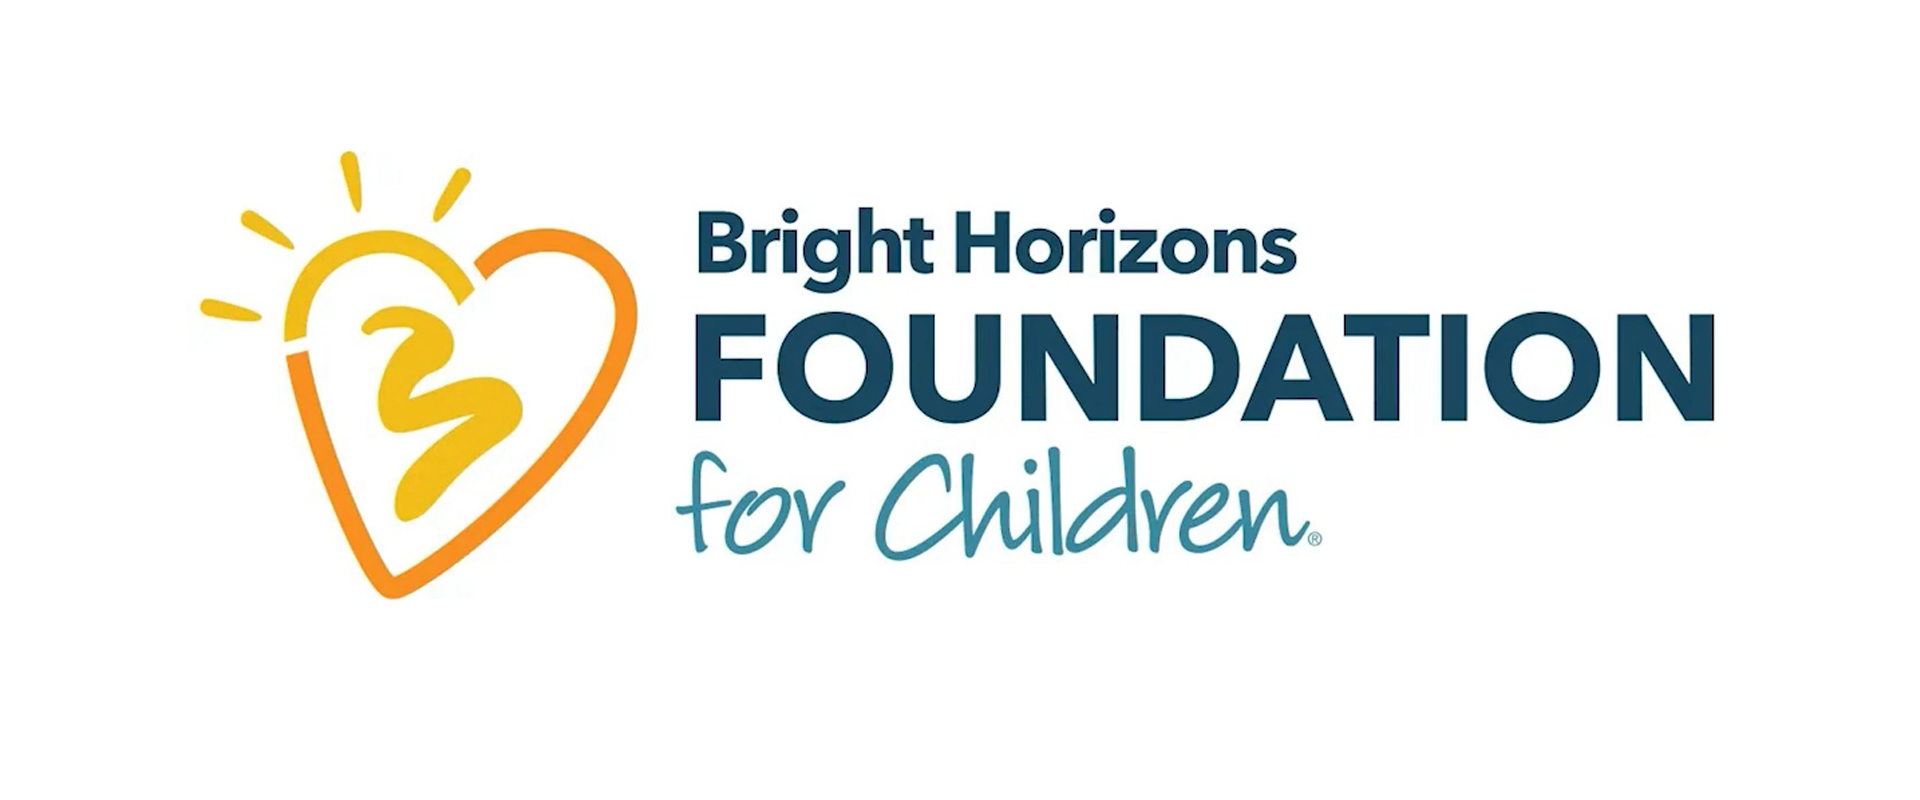 Nursery parent wins grant for Foundation for Children